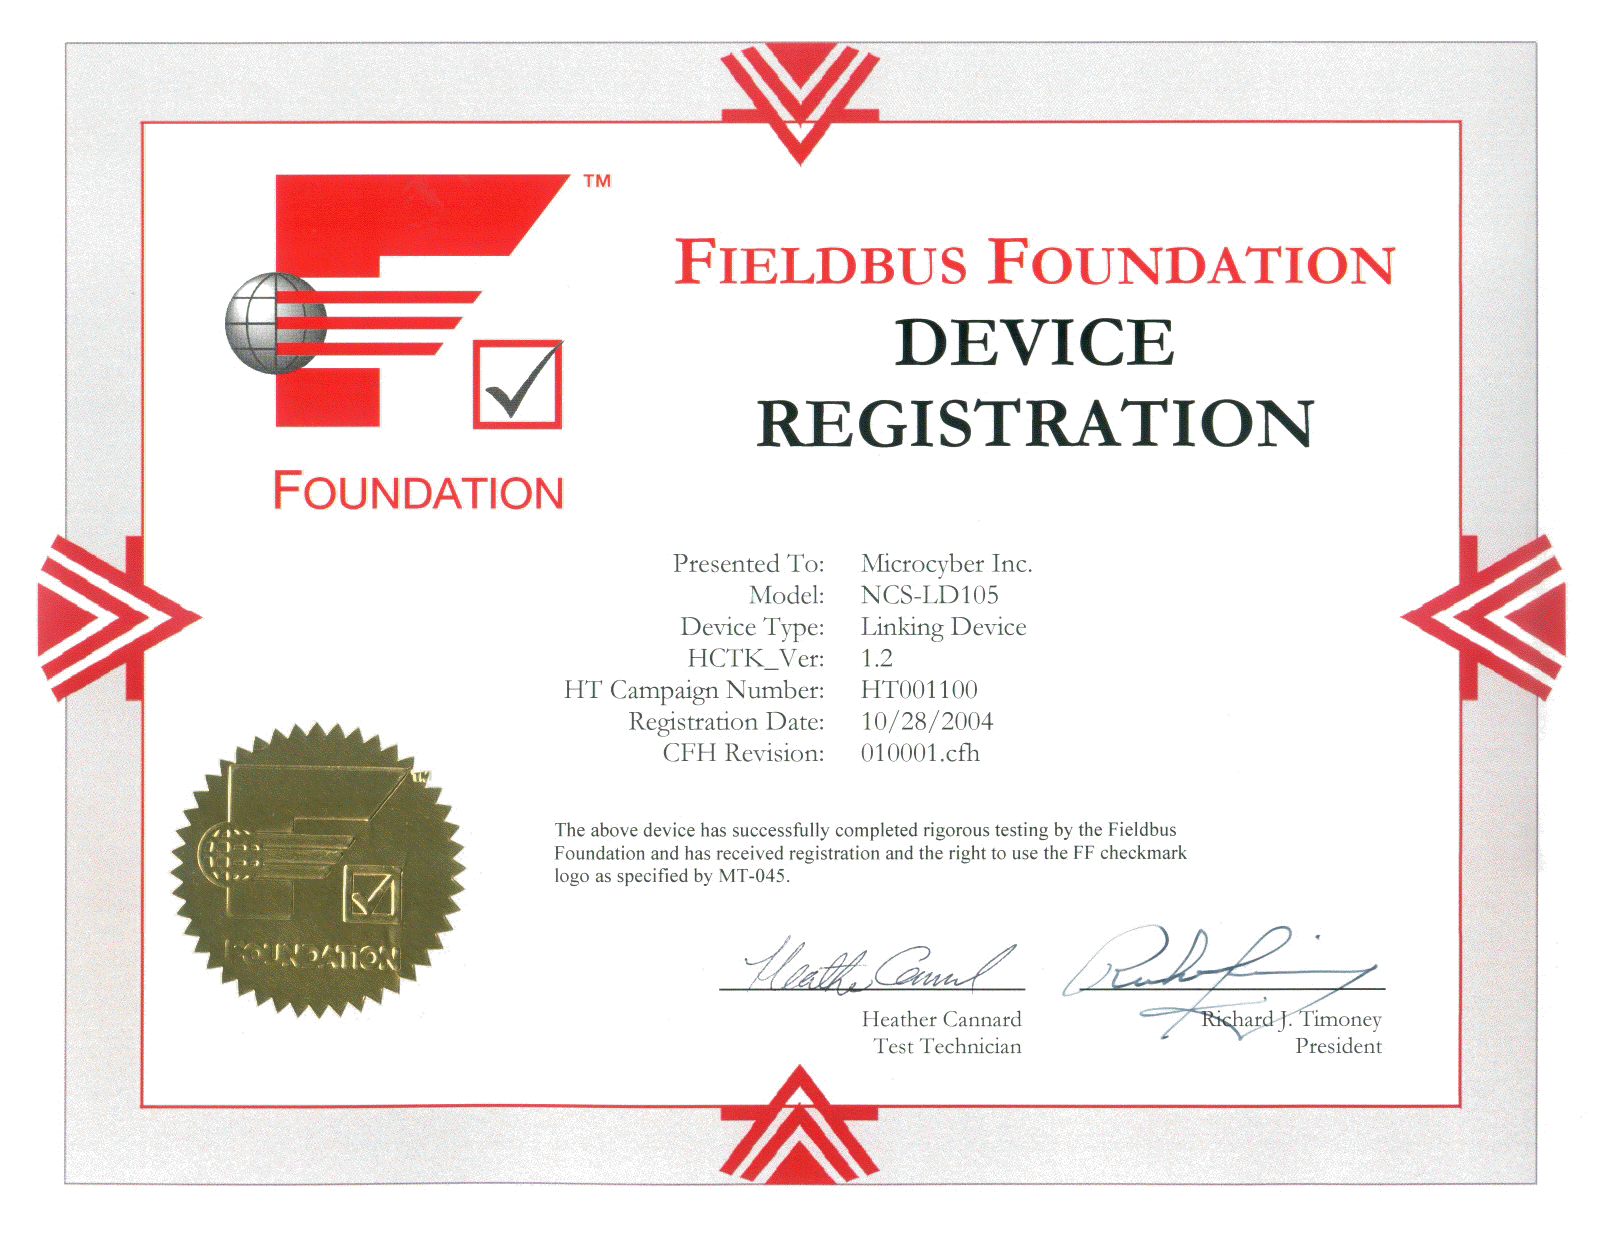 Geräteregistrierung der Fieldbus Foundation (NCS-LD105)